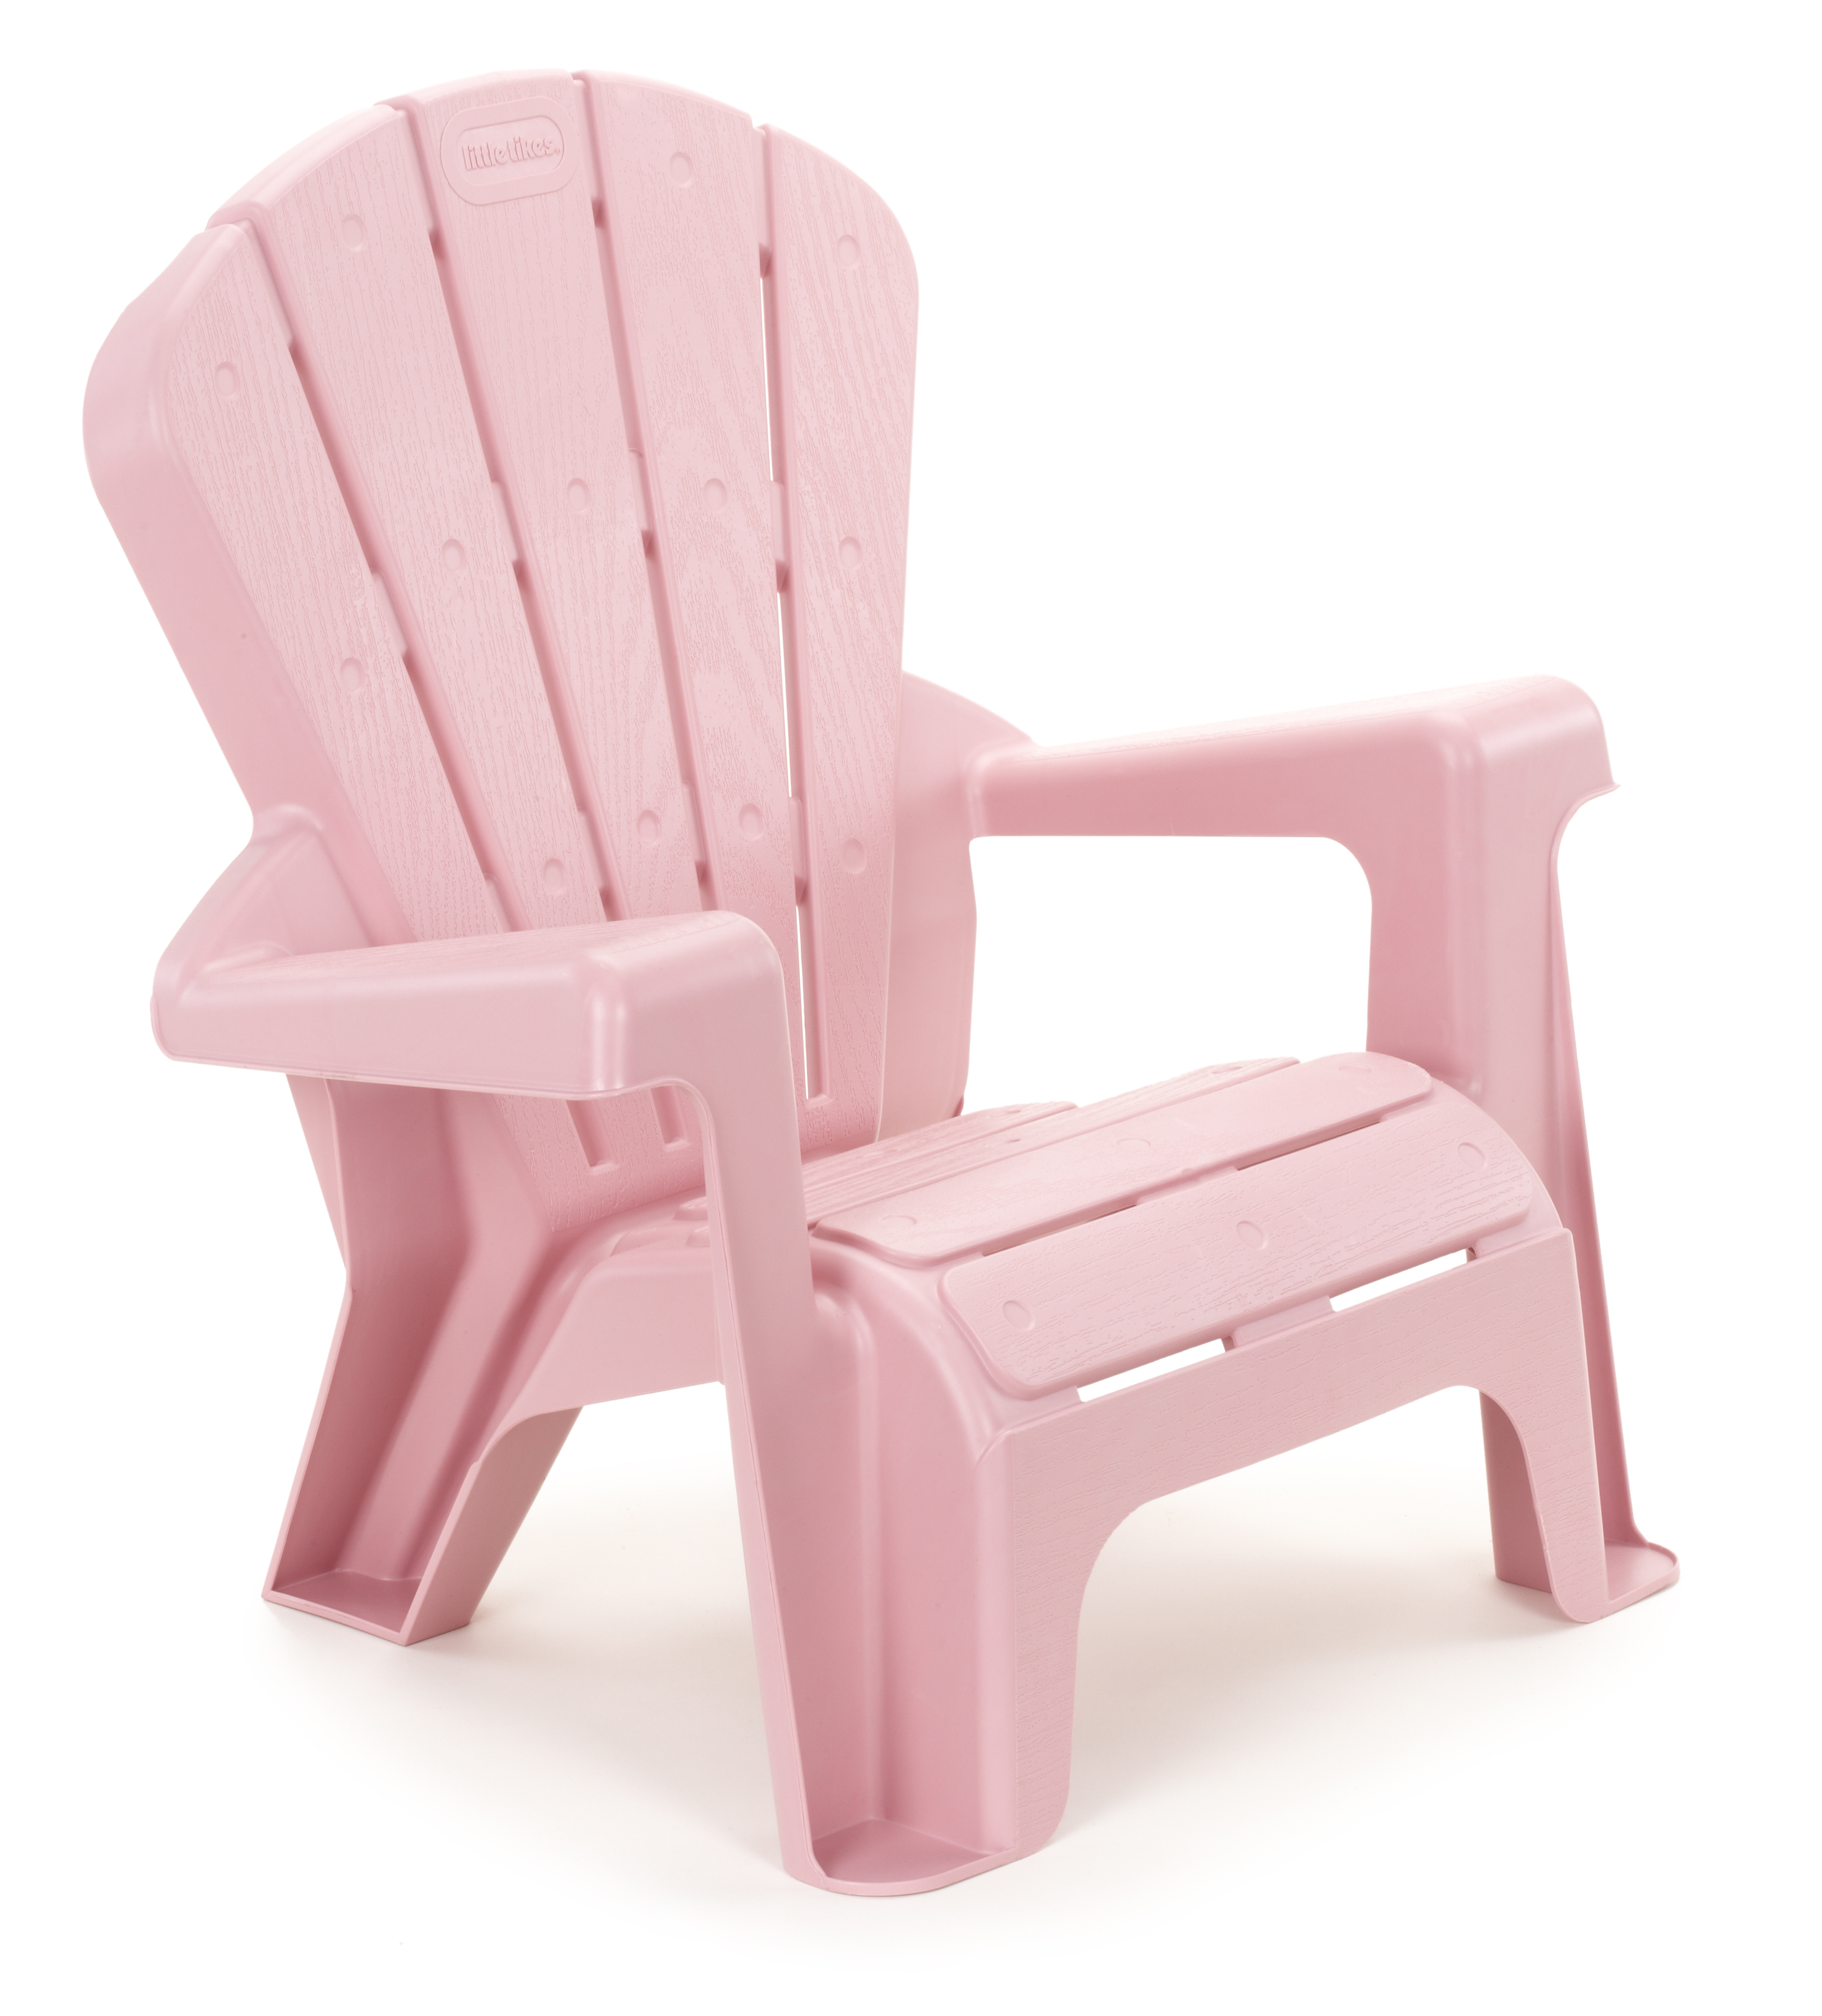 Little Tikes Garden Chair- Pink